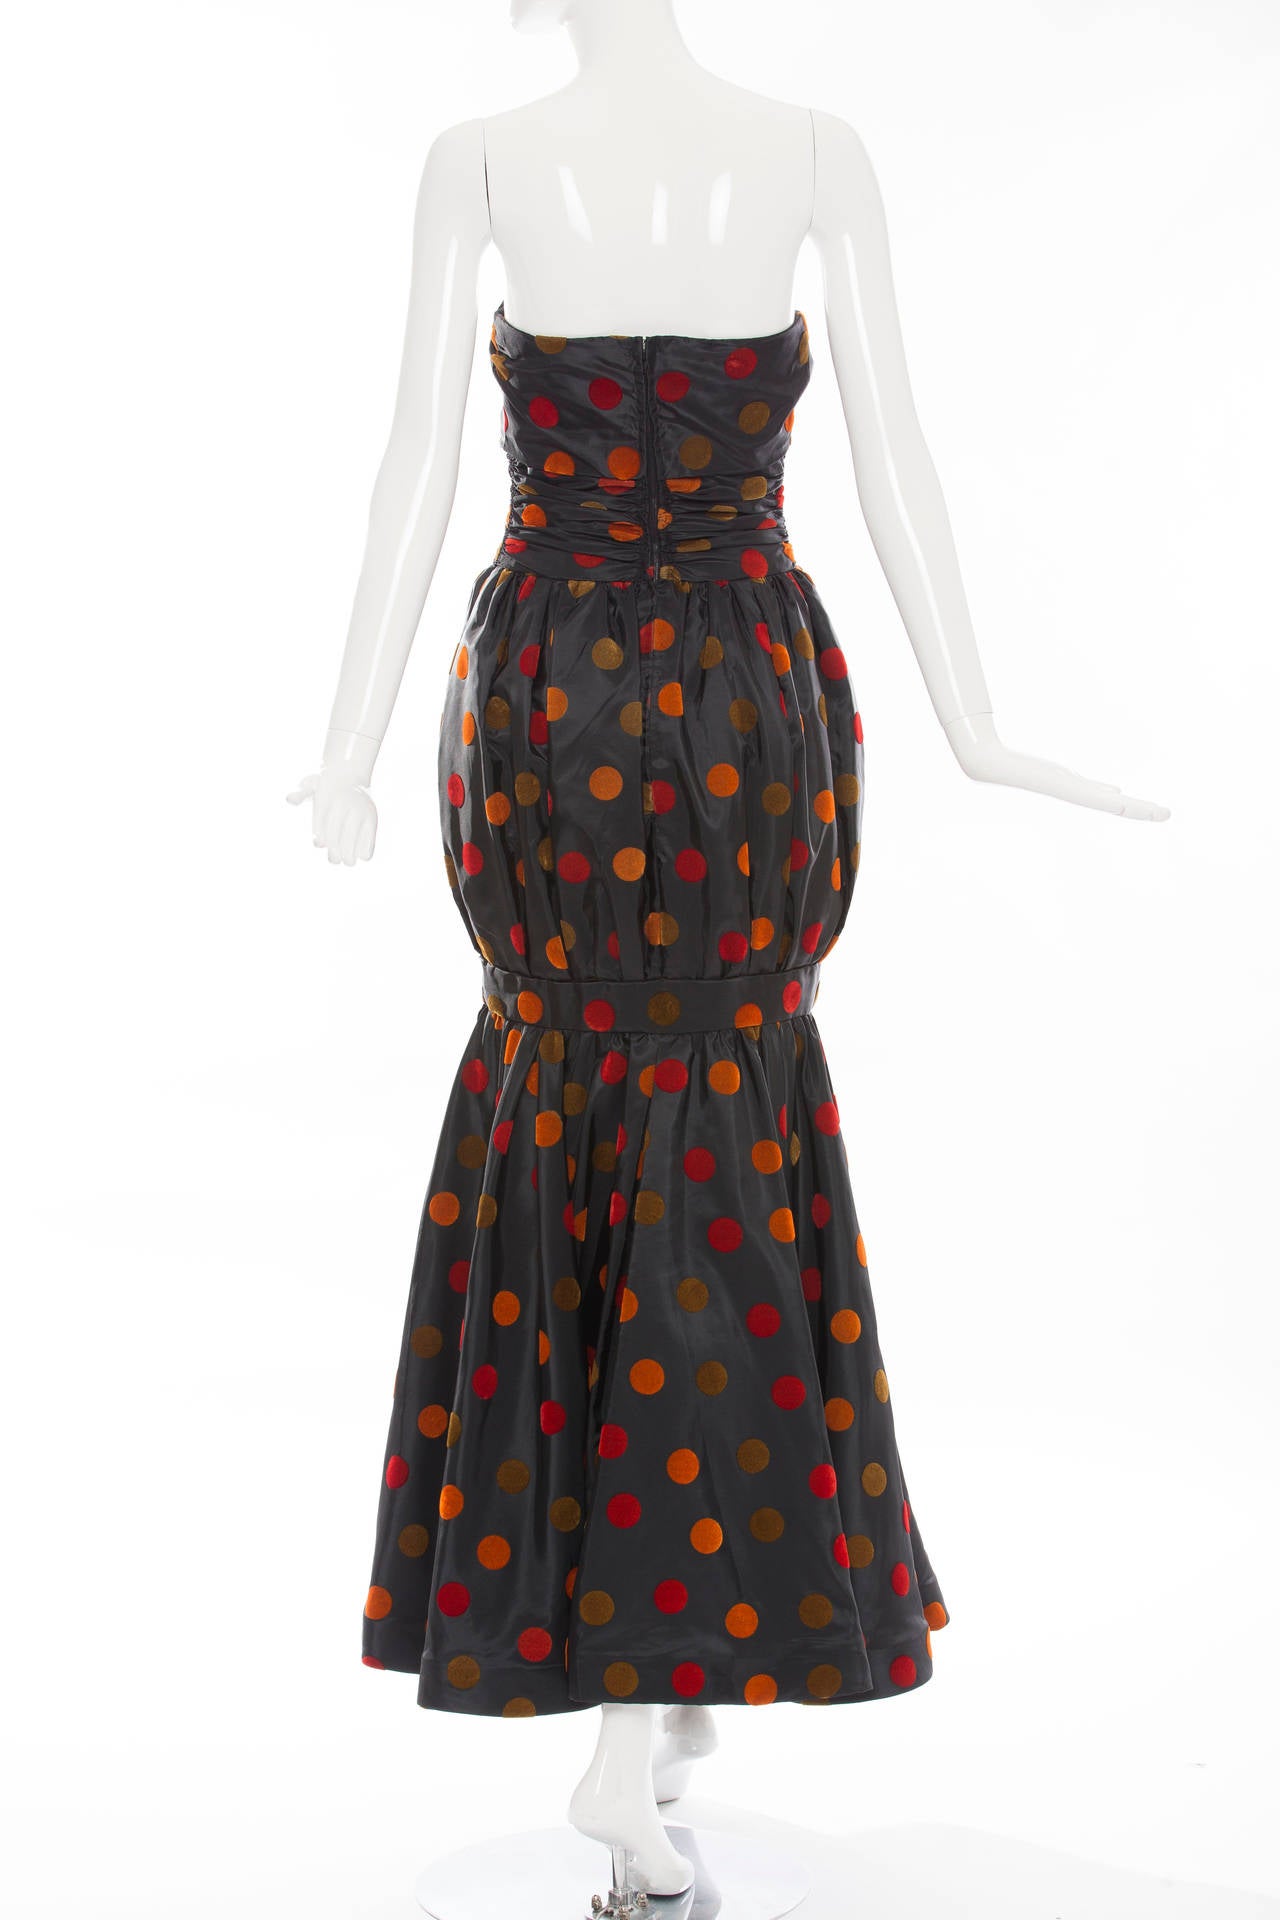 Nina Ricci Strapless Black Taffeta Velvet Polka Dots Evening Dress, Circa 1980s In Excellent Condition For Sale In Cincinnati, OH